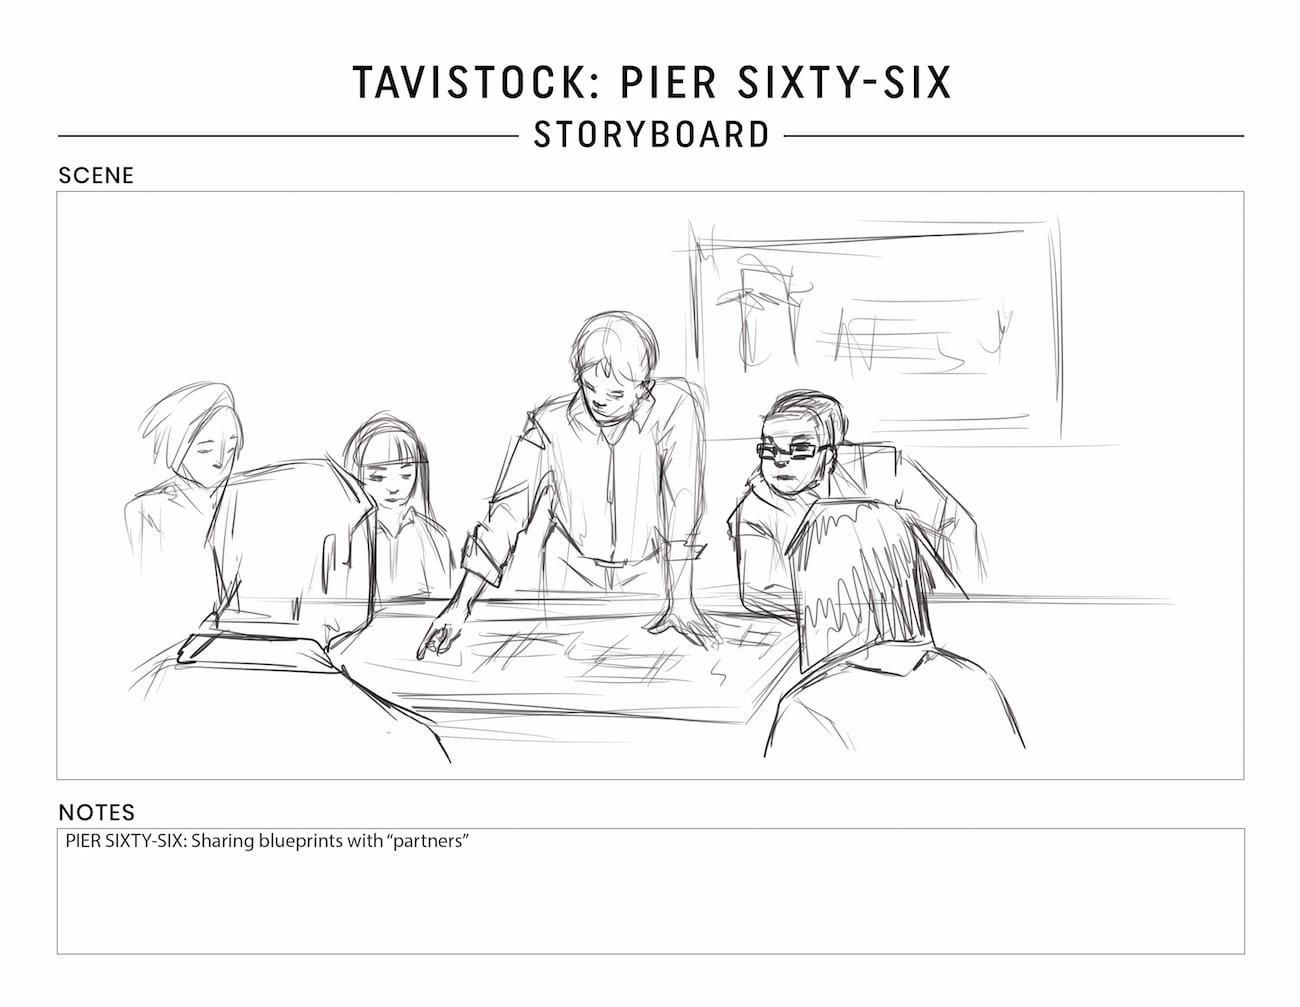 Tavistock Development Company C&I Studios Marketing Solutions Pier Sixty Six Storyboard Sharing blueprints with partners